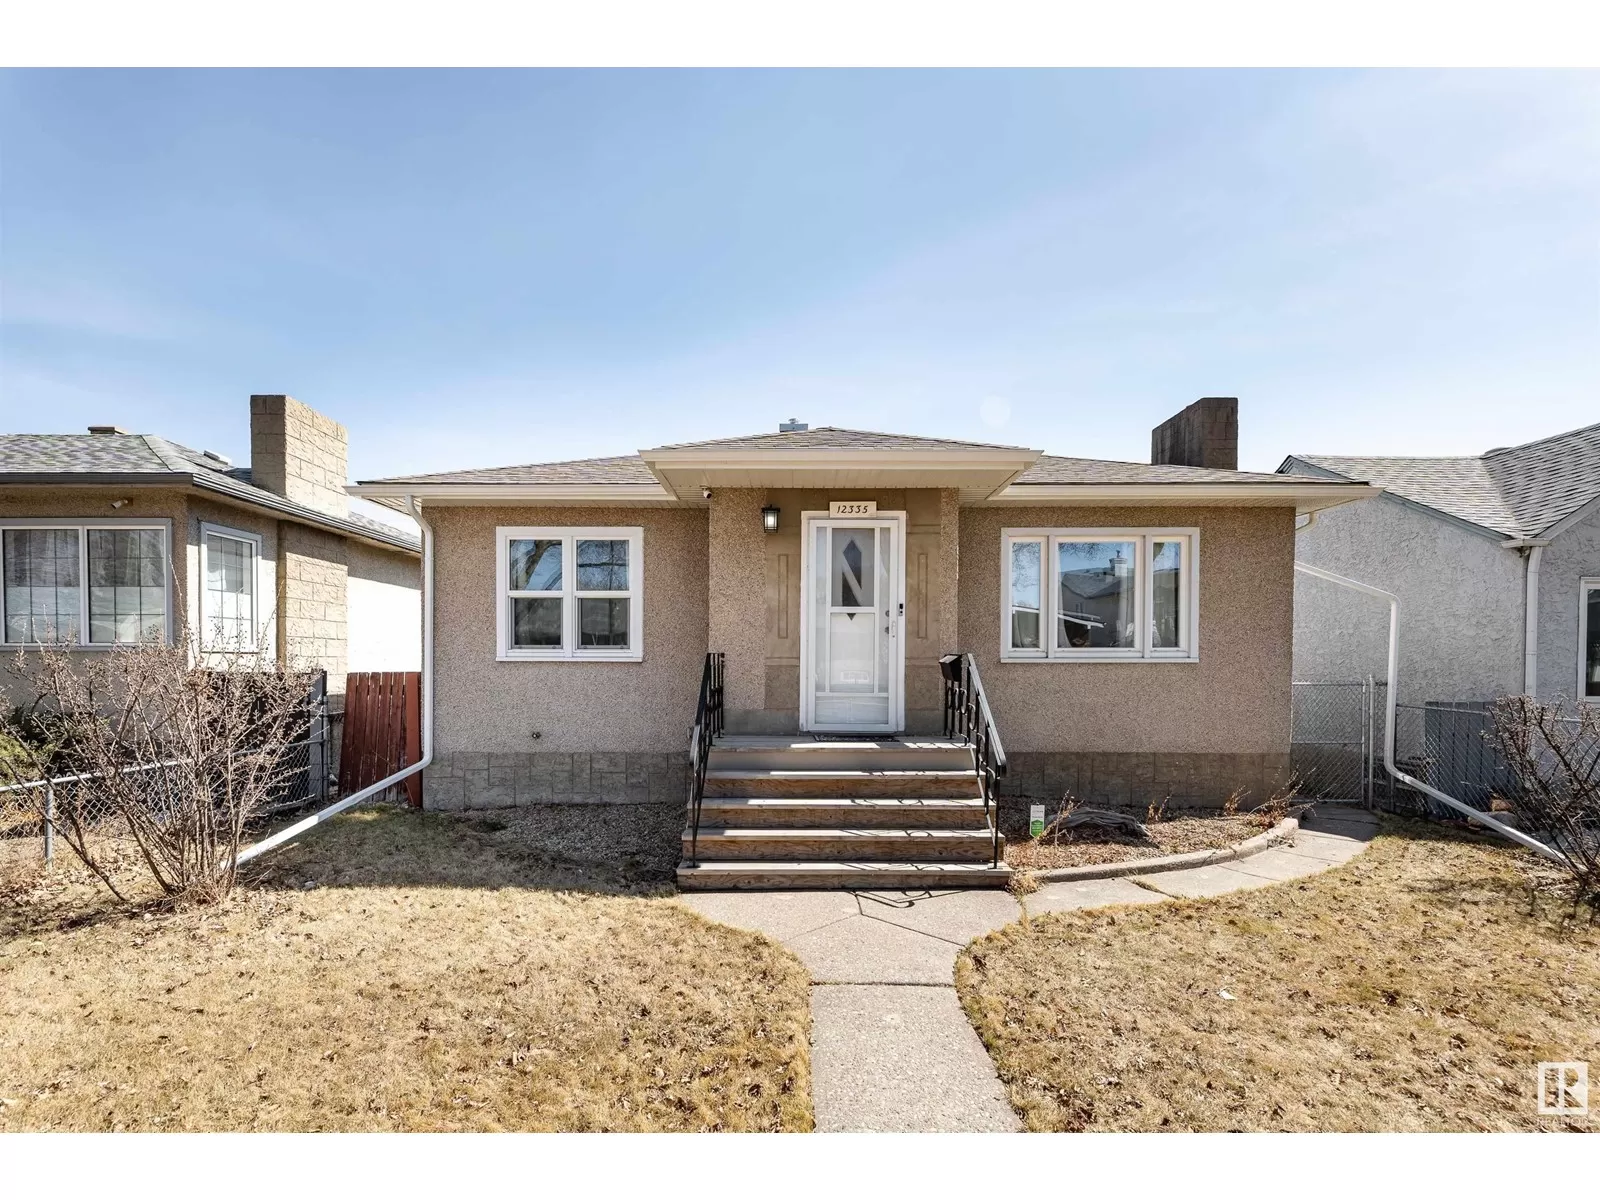 House for rent: 12335 93 St Nw, Edmonton, Alberta T5G 1G3